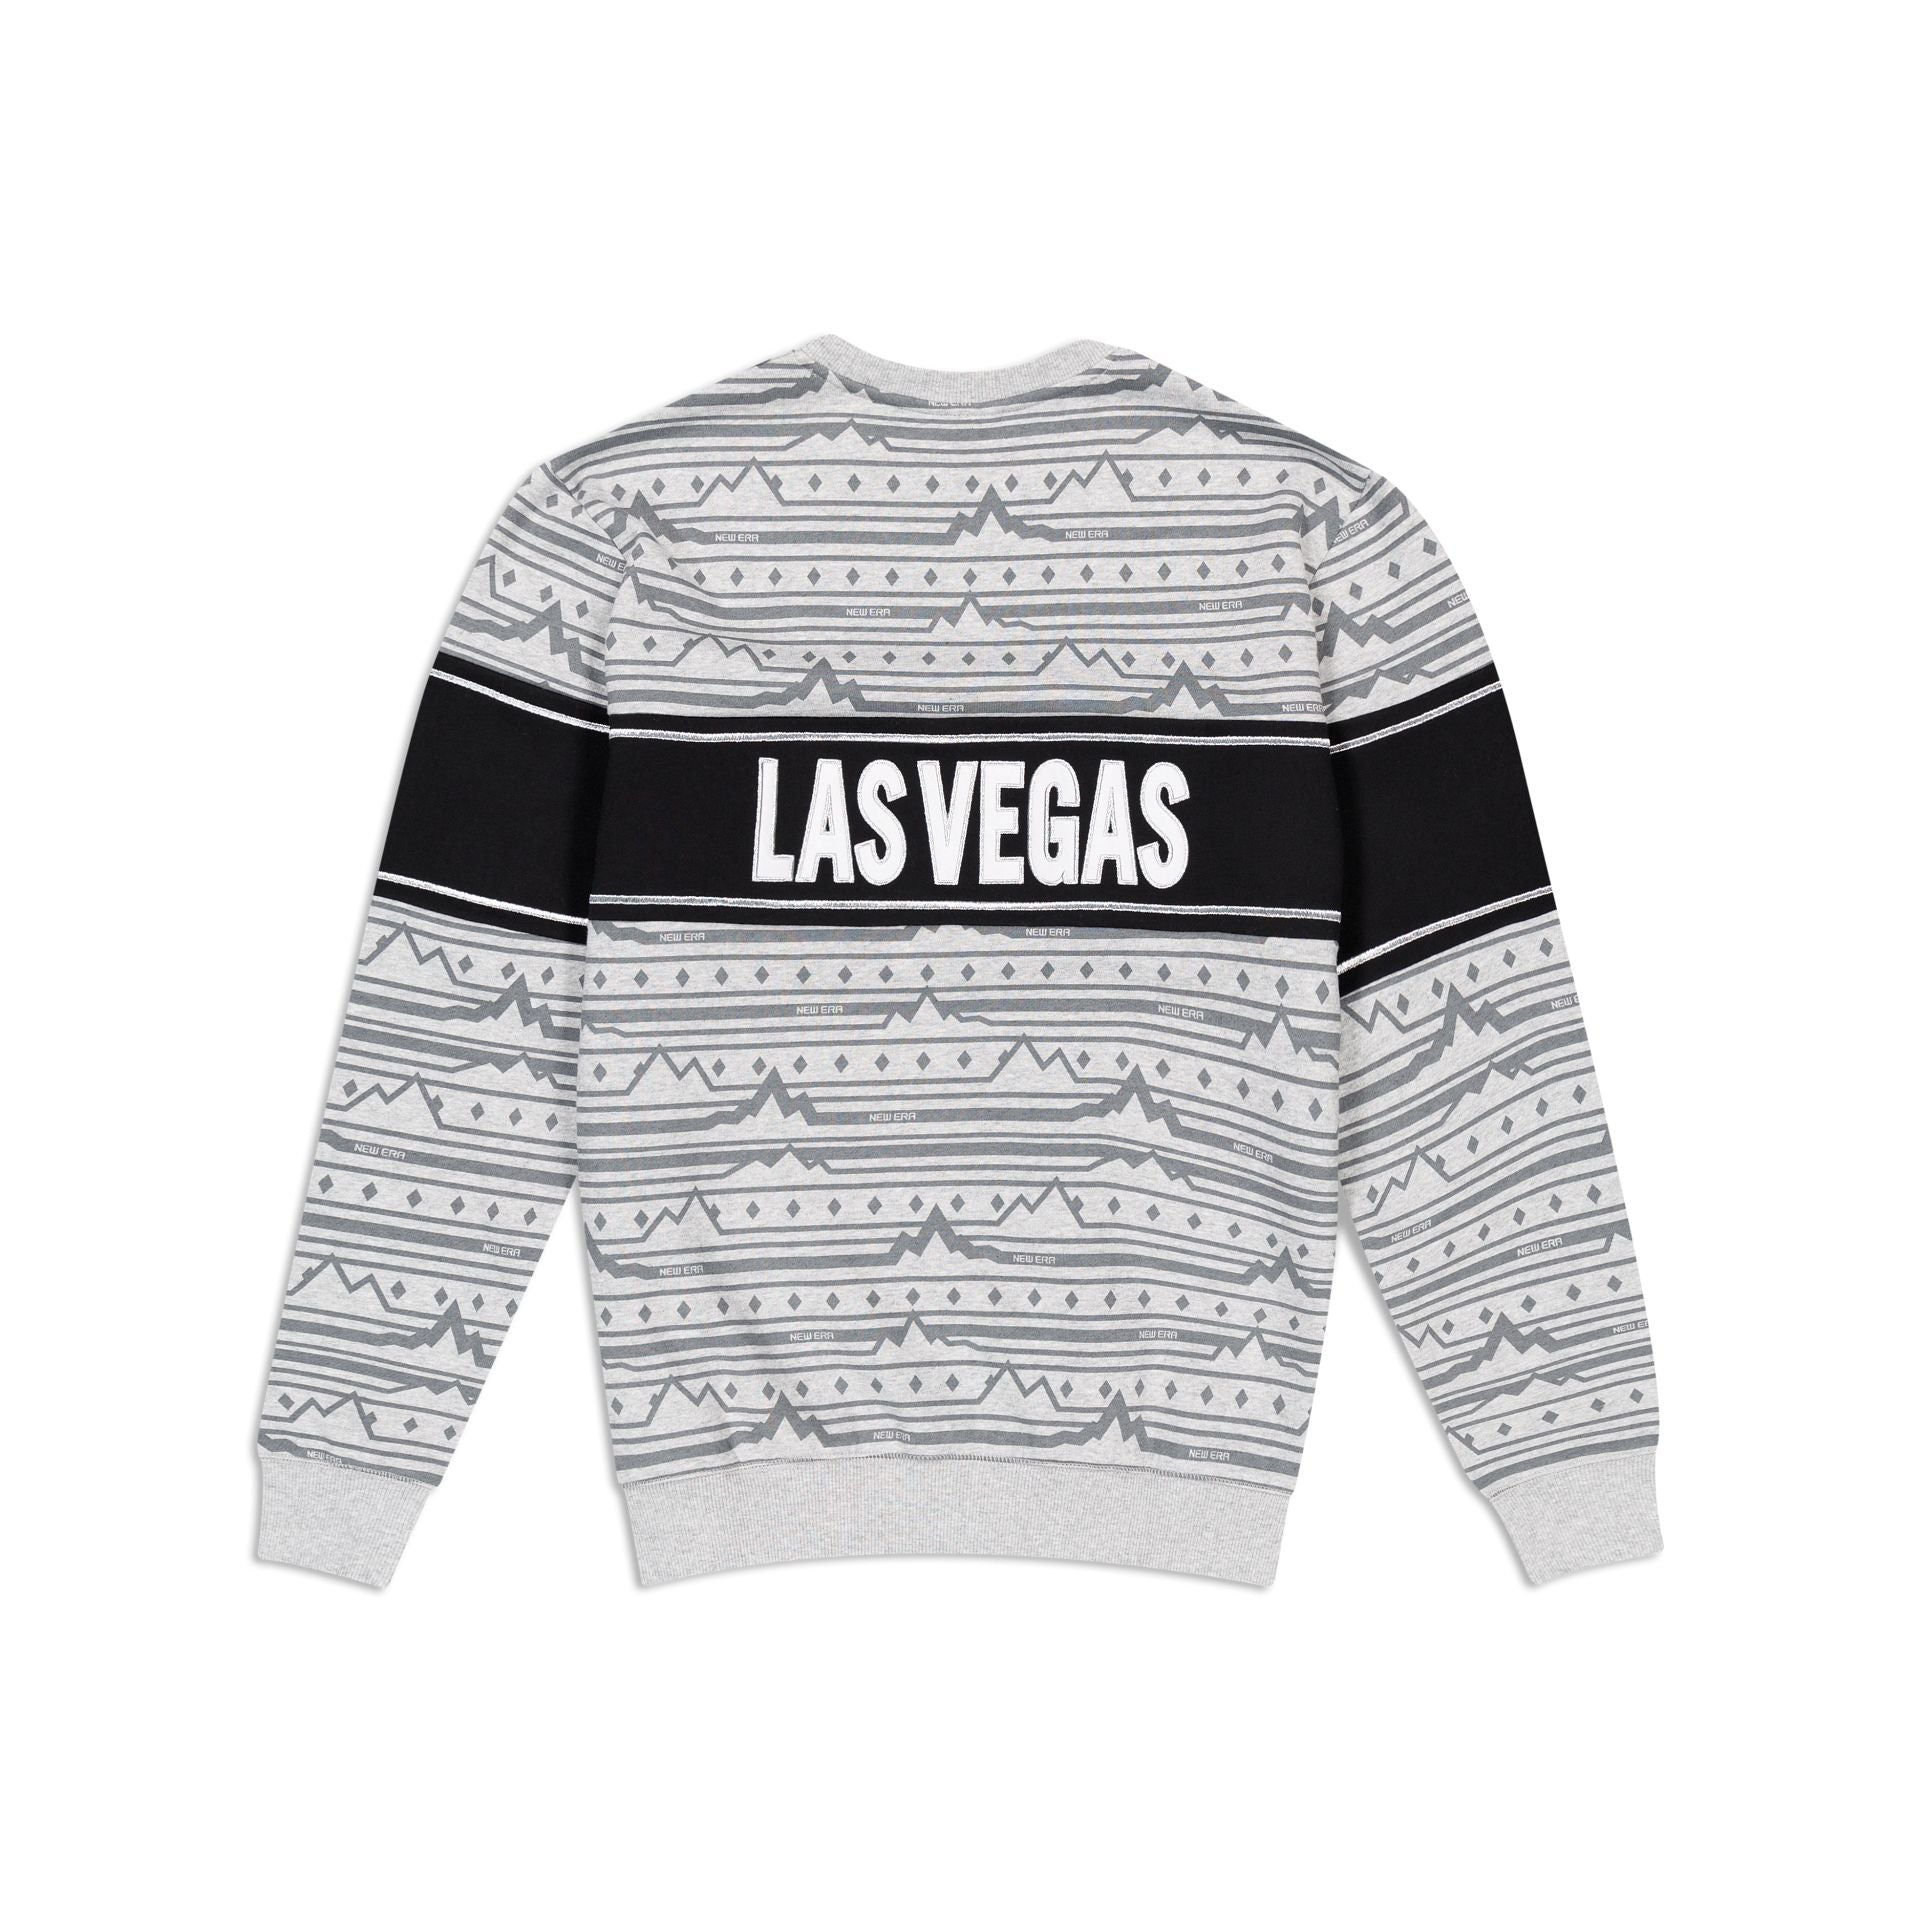 Las Vegas Raiders Shirt, Sweatshirt - TeeDragons